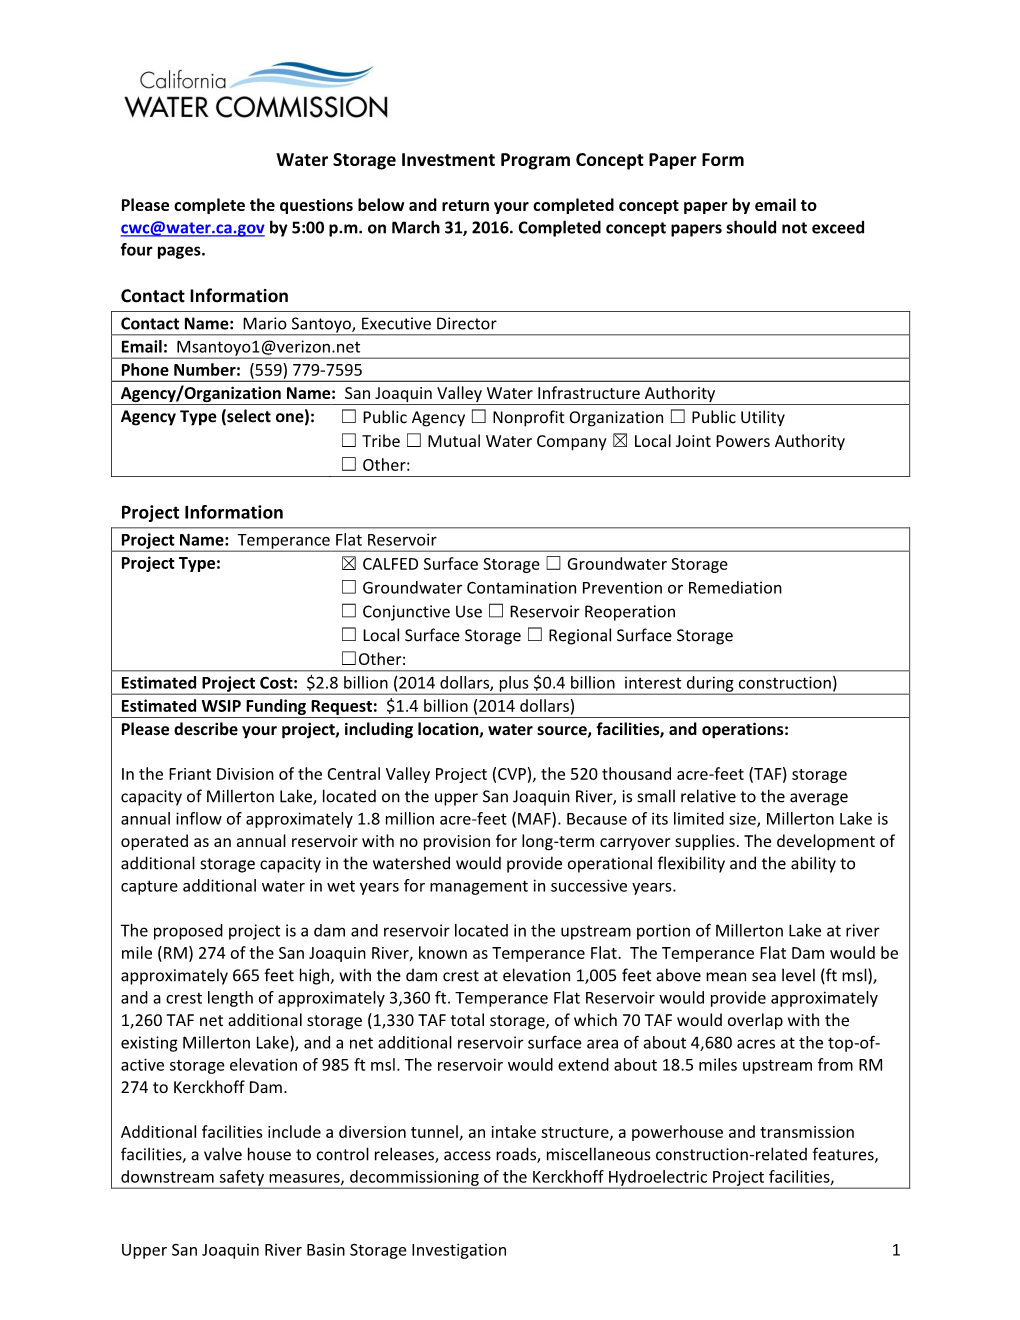 Temperance Flat Project Concept Paper